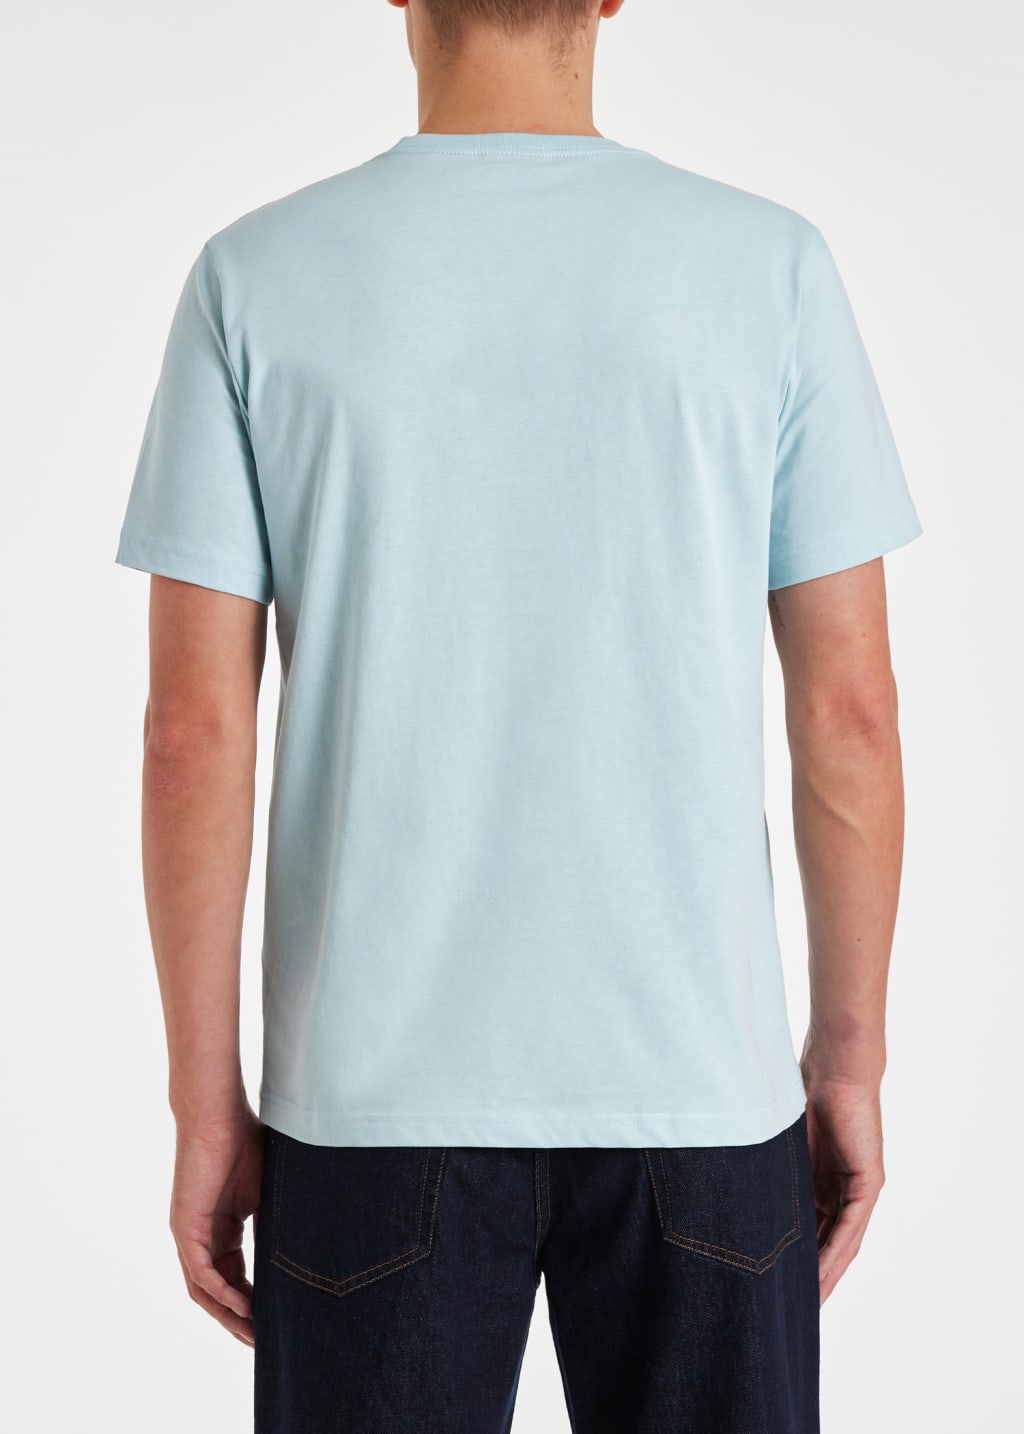 Model View - Sky Blue Organic Cotton Zebra Logo T-Shirt Paul Smith